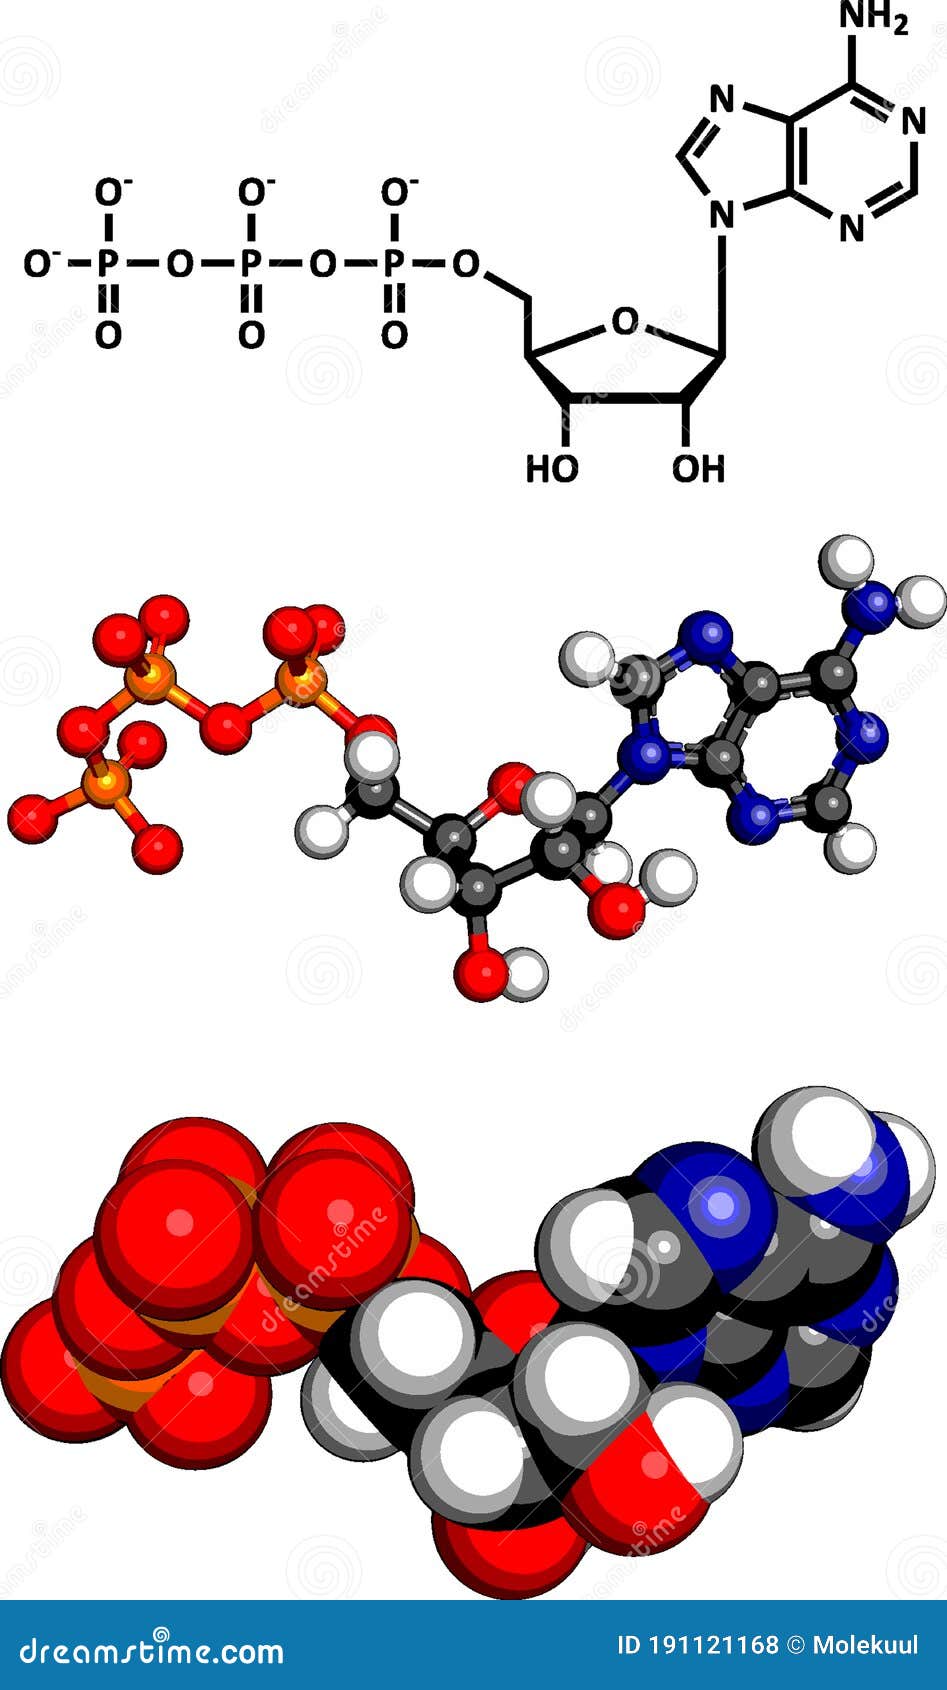 Adenosine triphosphate (ATP) energy transport molecule, chemical structure